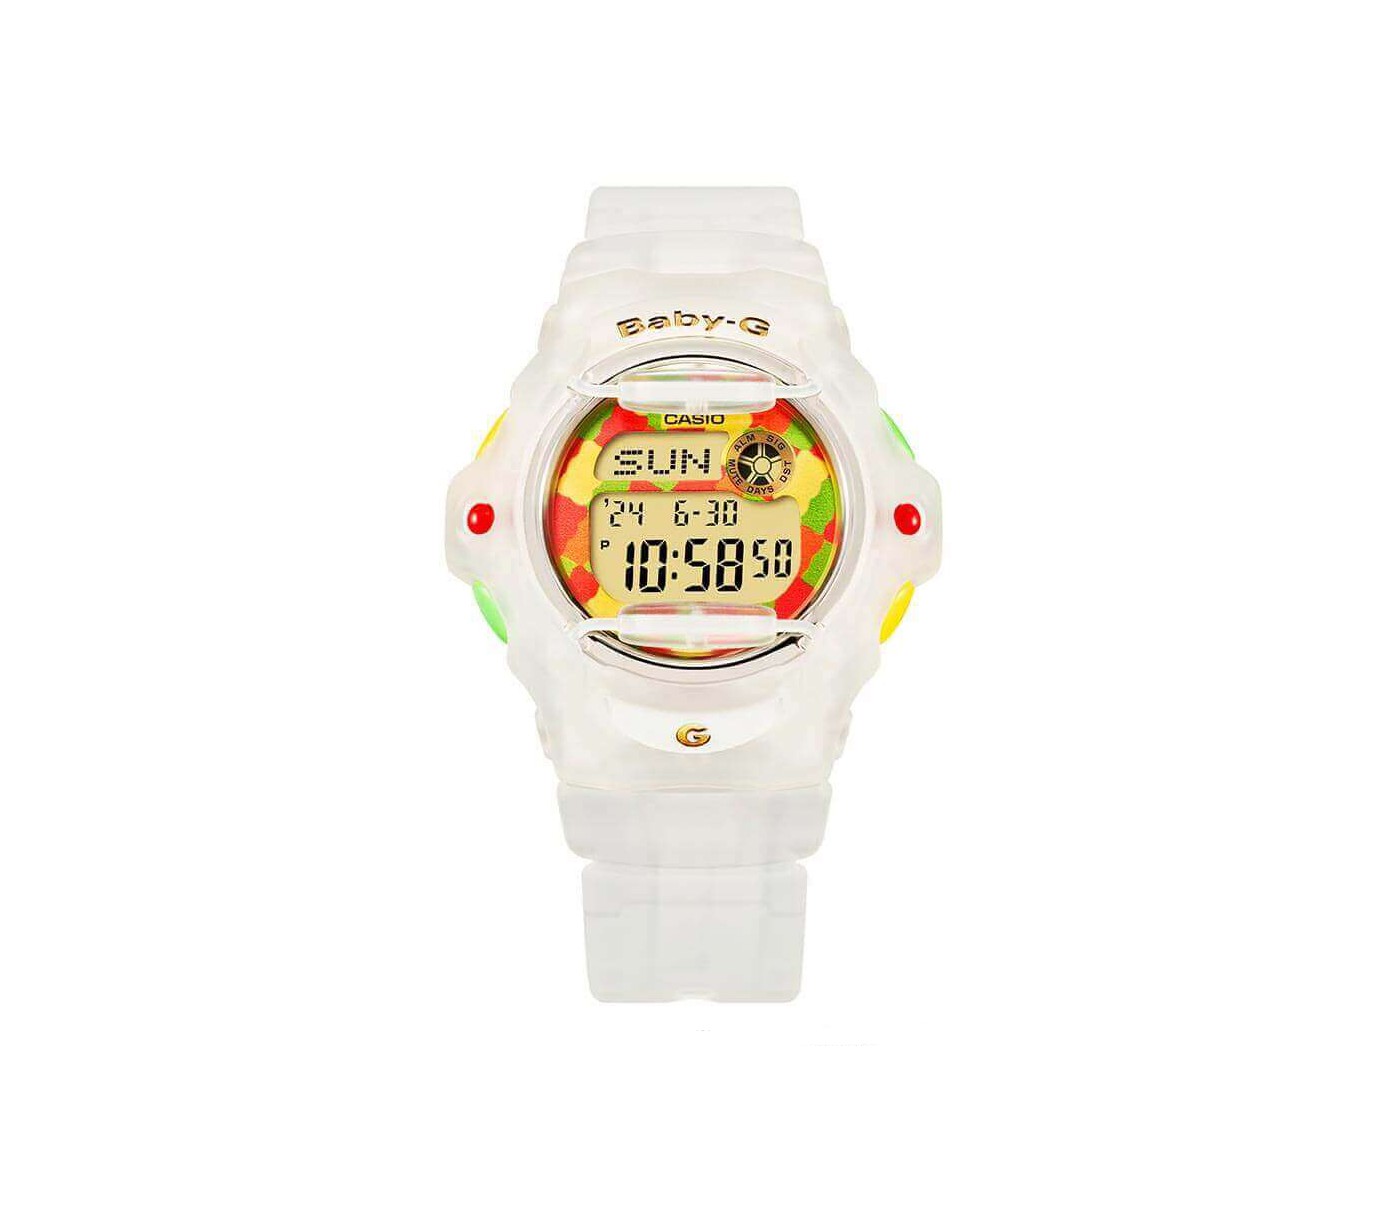 Discrepancia Adviento Intercambiar Reloj Casio G-Shock Haribo BG-169HRB-7ER | Joyería River